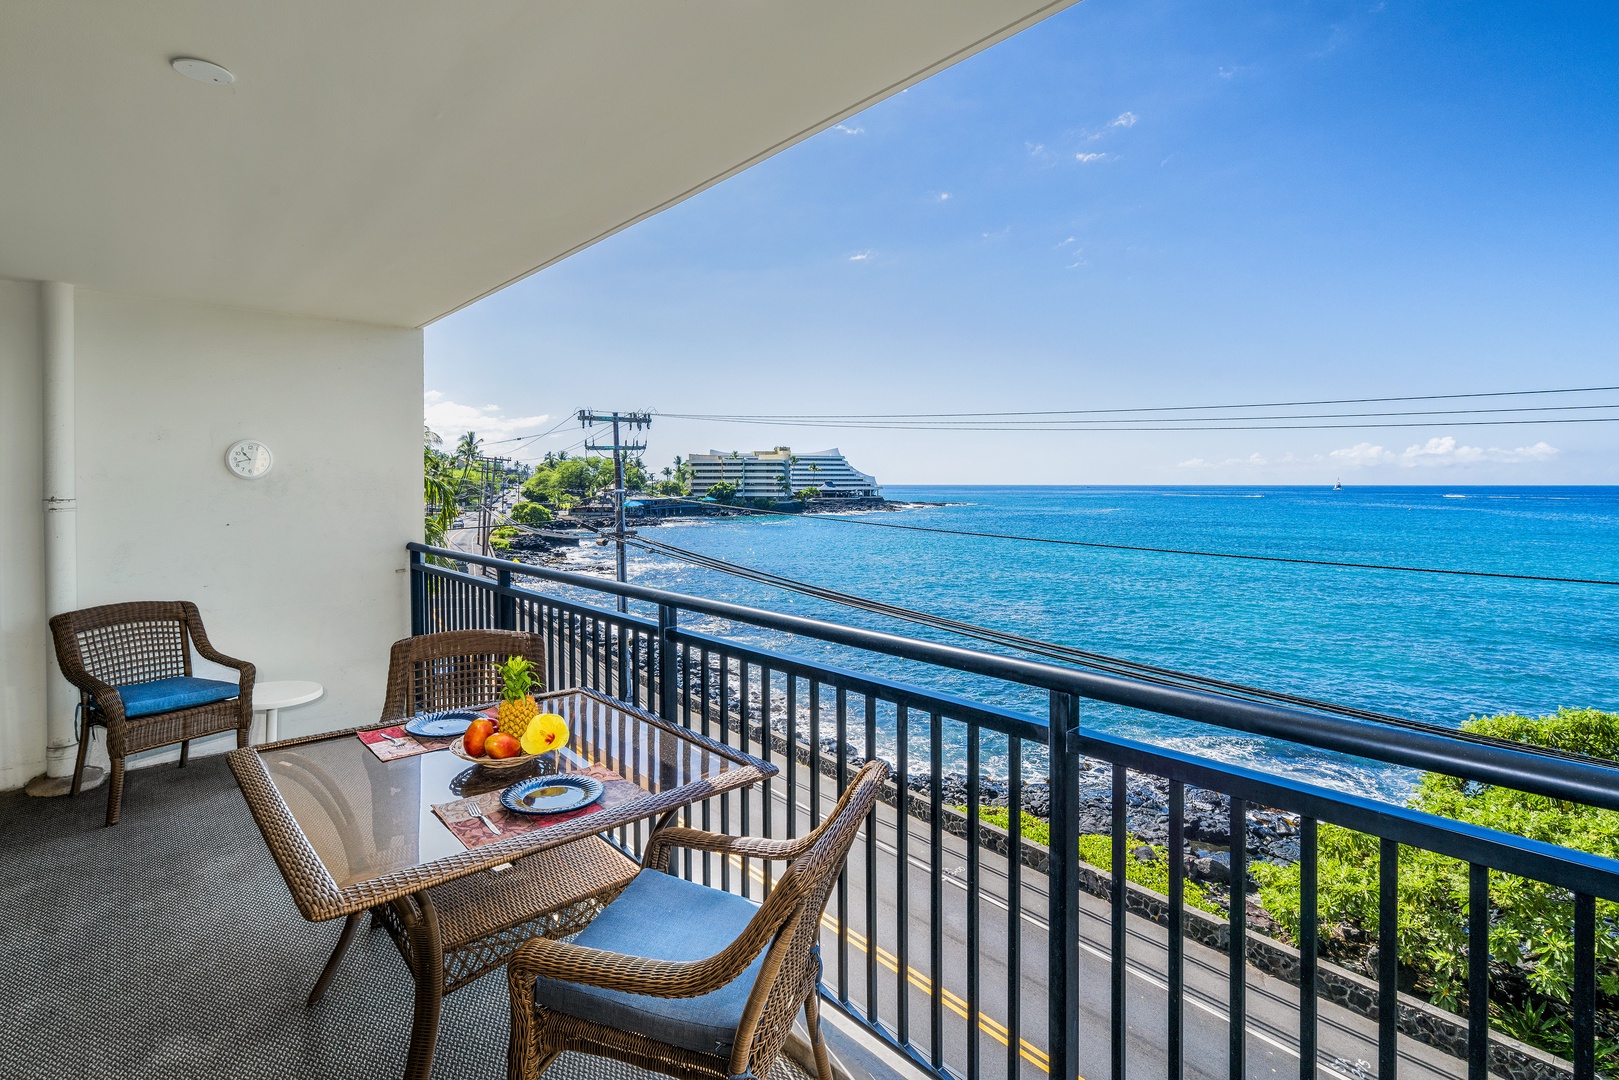 Kailua Kona Vacation Rentals, Kona Alii 304 - Breathtaking views on the coastline and Royal Kona Hotel!